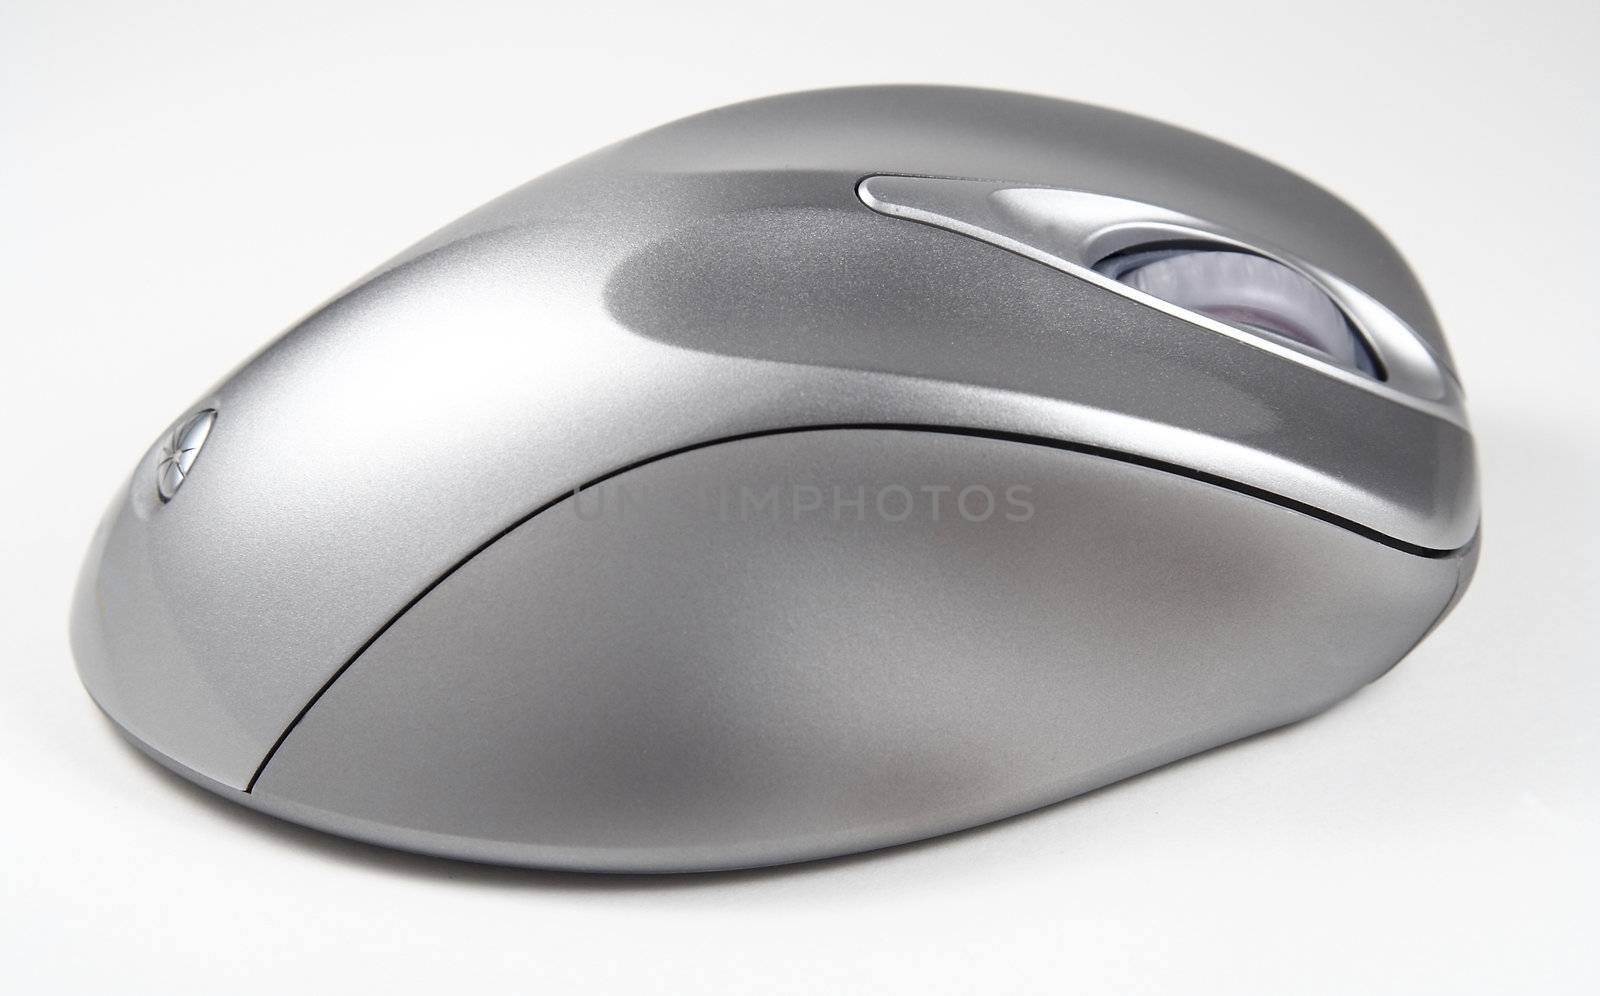 Cordless optical mouse on white background